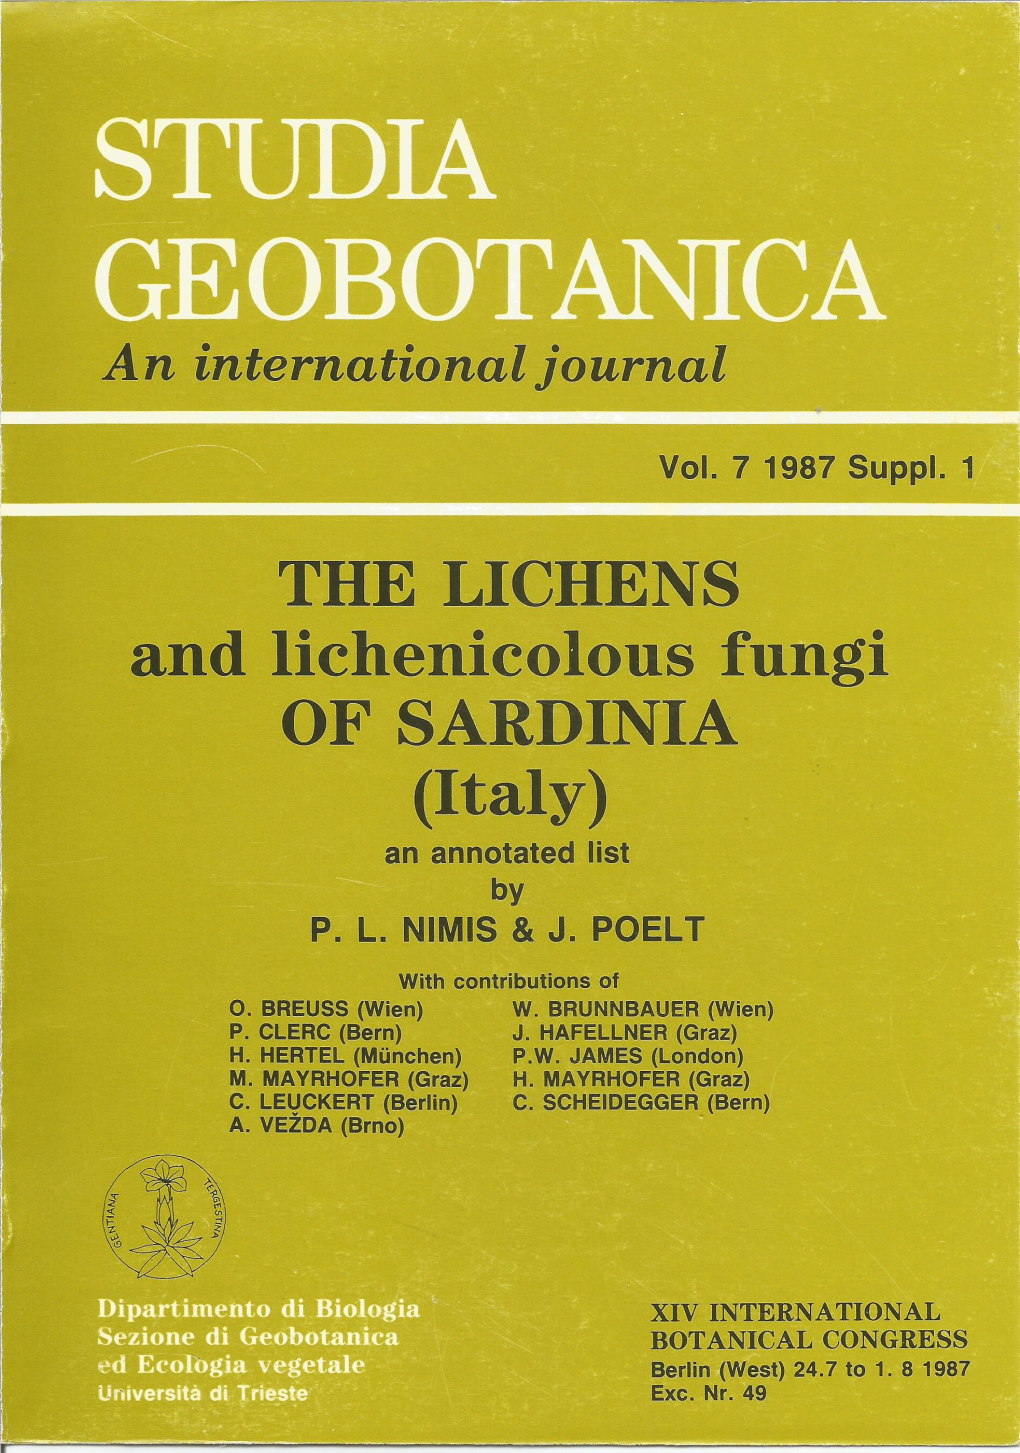 SG Vol 7 Supplemento-1 1987.Pdf